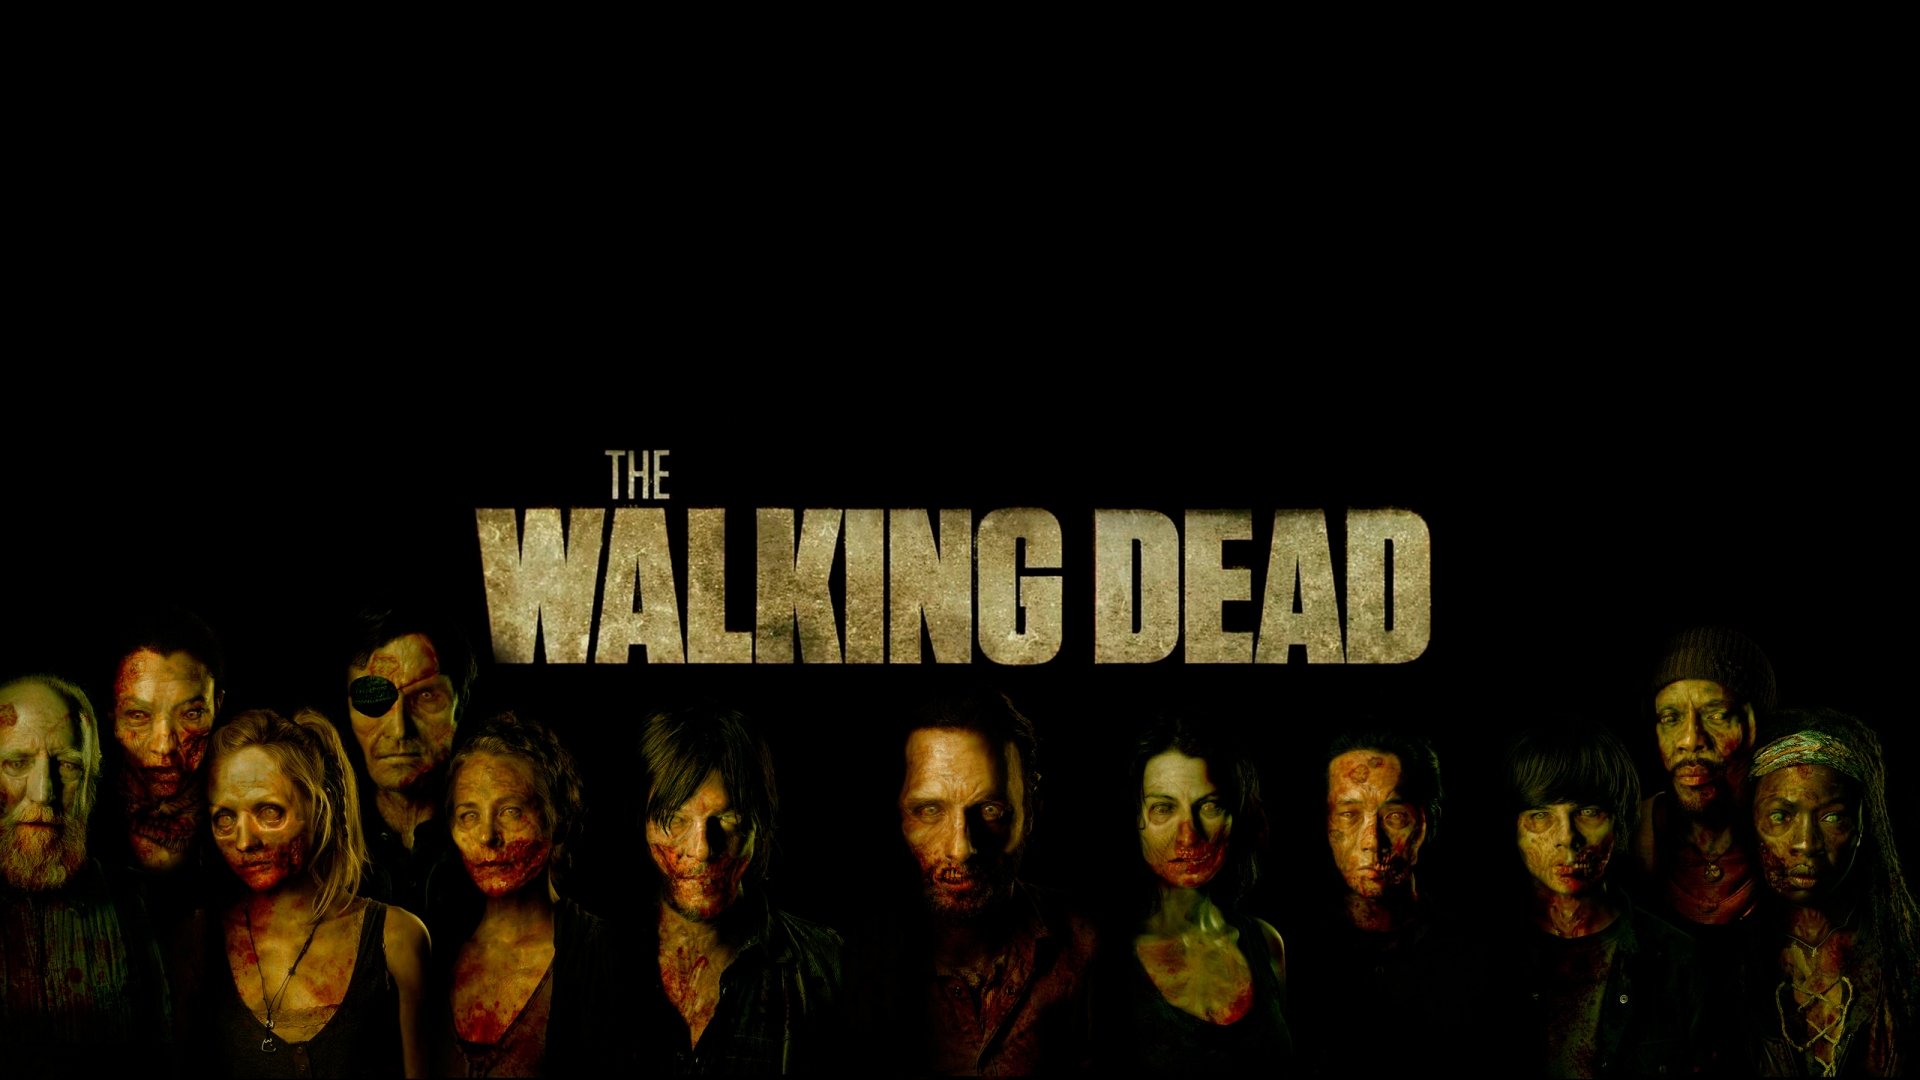 The Walking Dead Poster Art  for 1920 x 1080 HDTV 1080p resolution